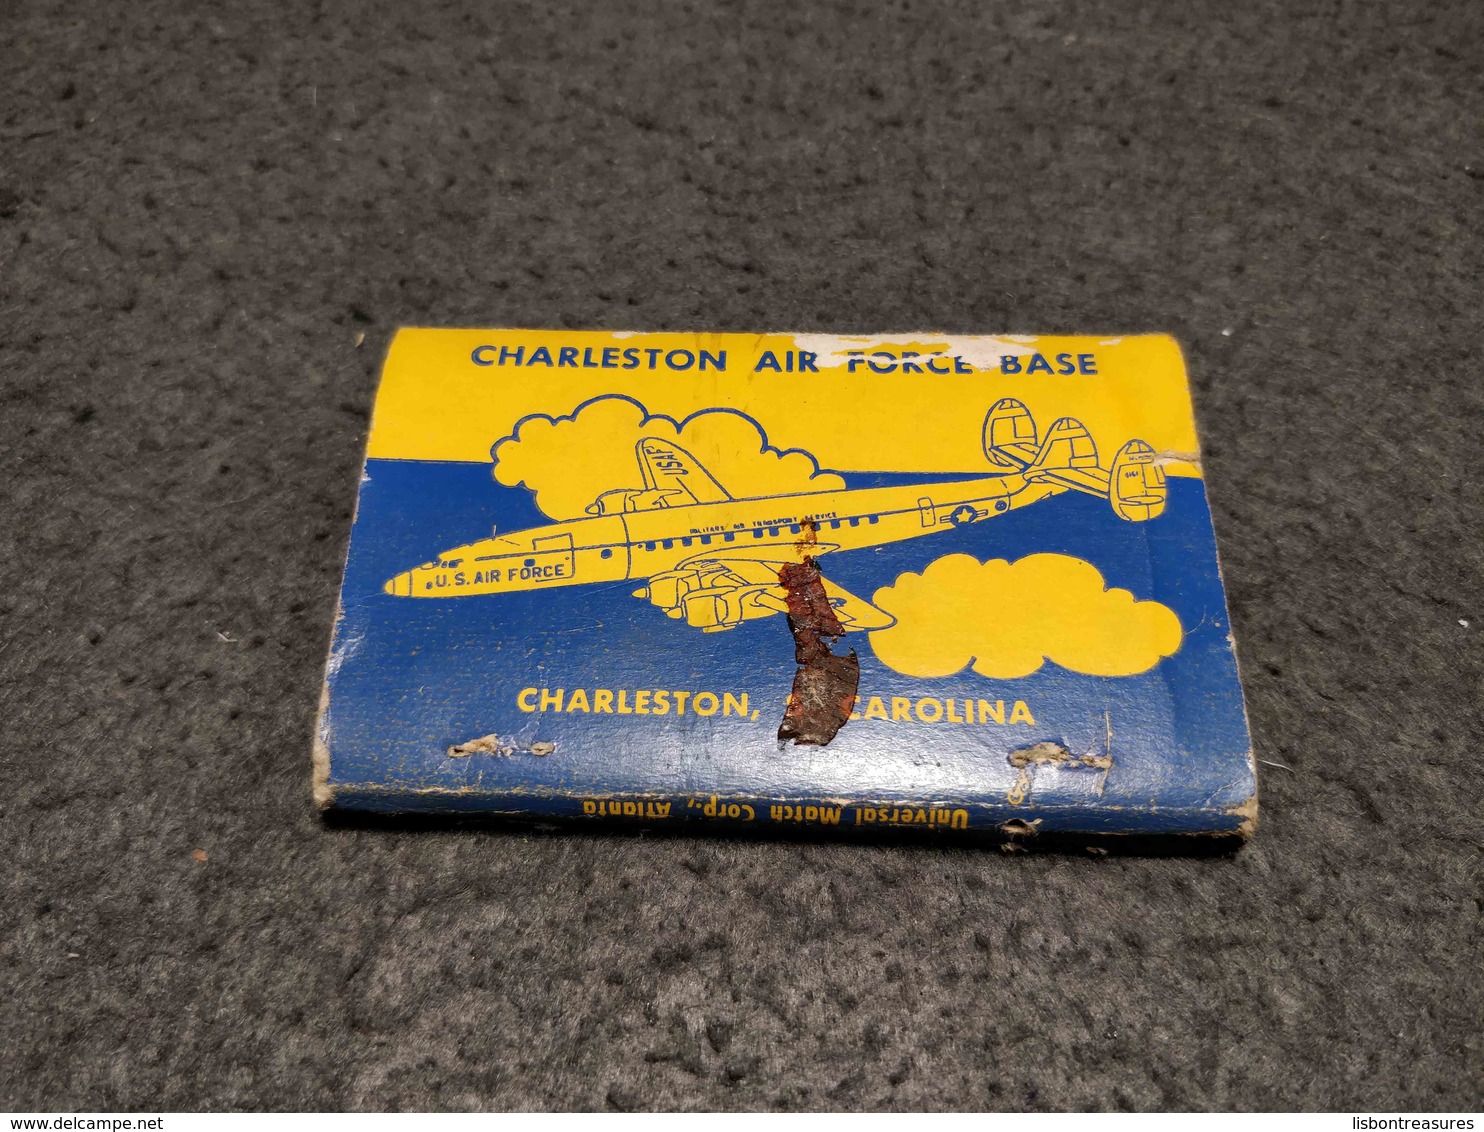 ANTIQUE MATCHBOX MATCHES LABEL ADVERTISING CHARLESTON AIR FORCE BASE MILITARY UNITED STATES - Streichholzschachteln